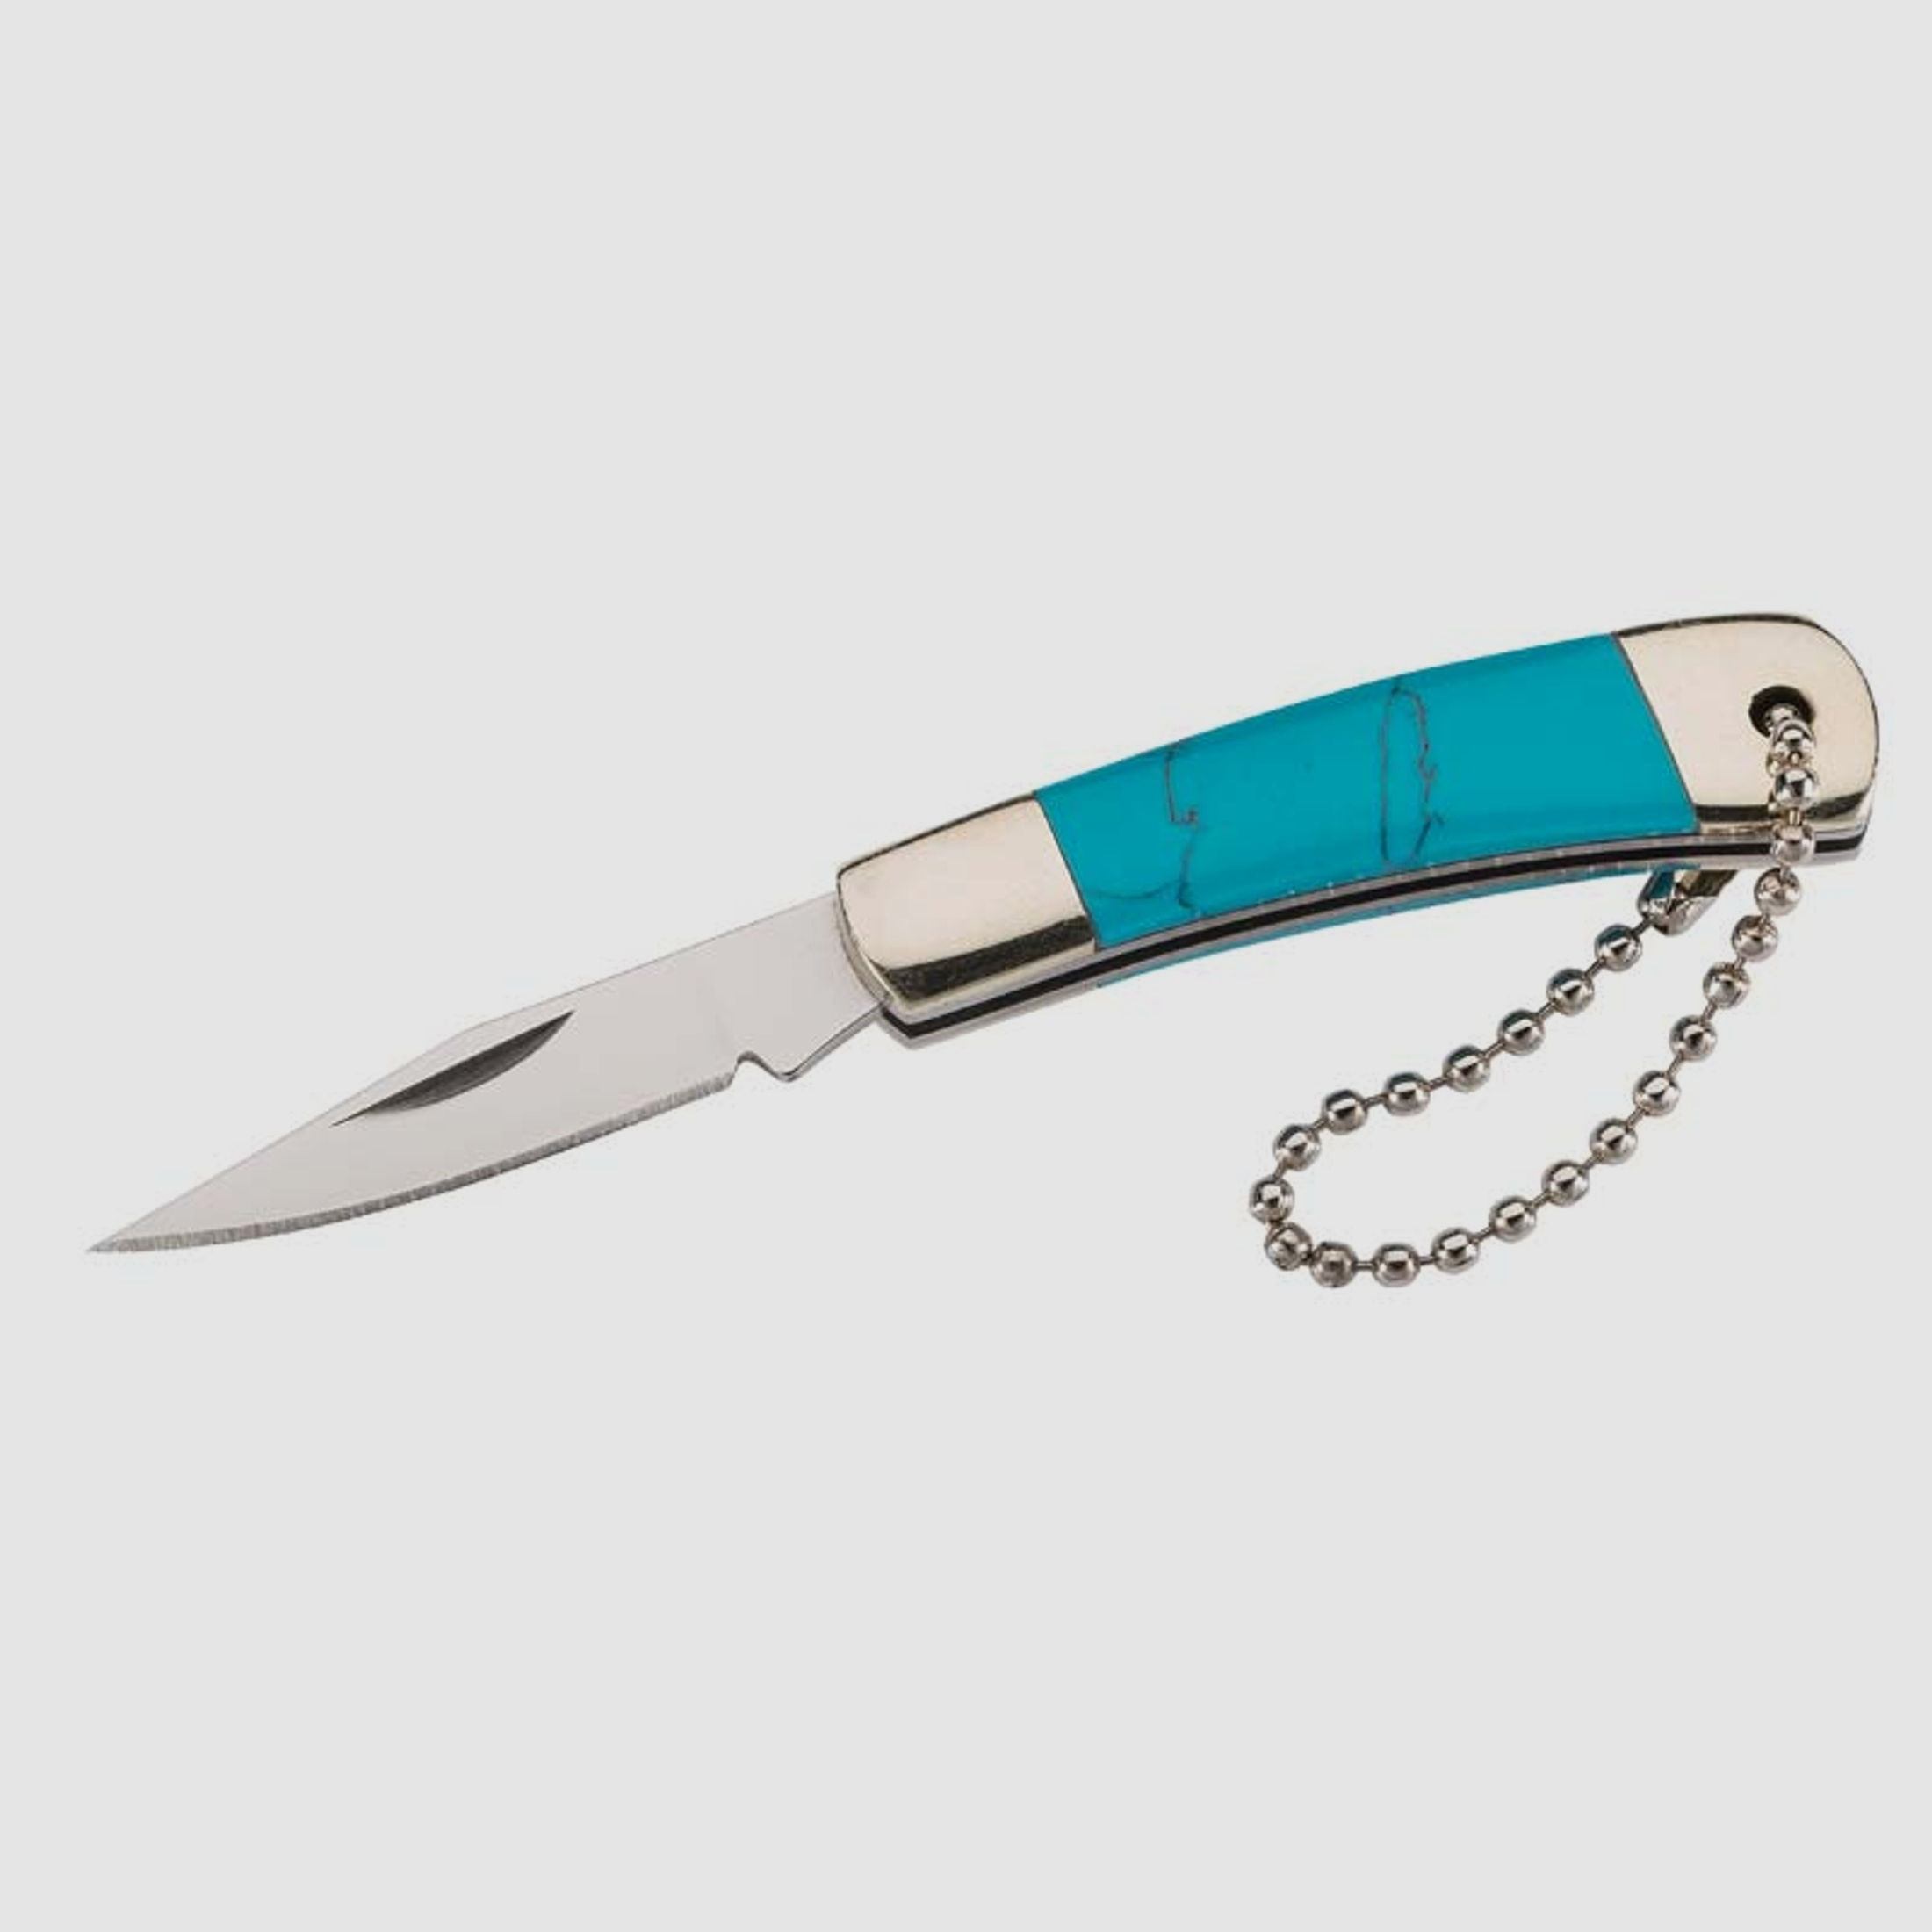 HERBERTZ Mini-Taschenmesser, Stahl AISI 420, Nagelhau,, türkise Heftschalen, Fangriemenöse mit Kugelkette